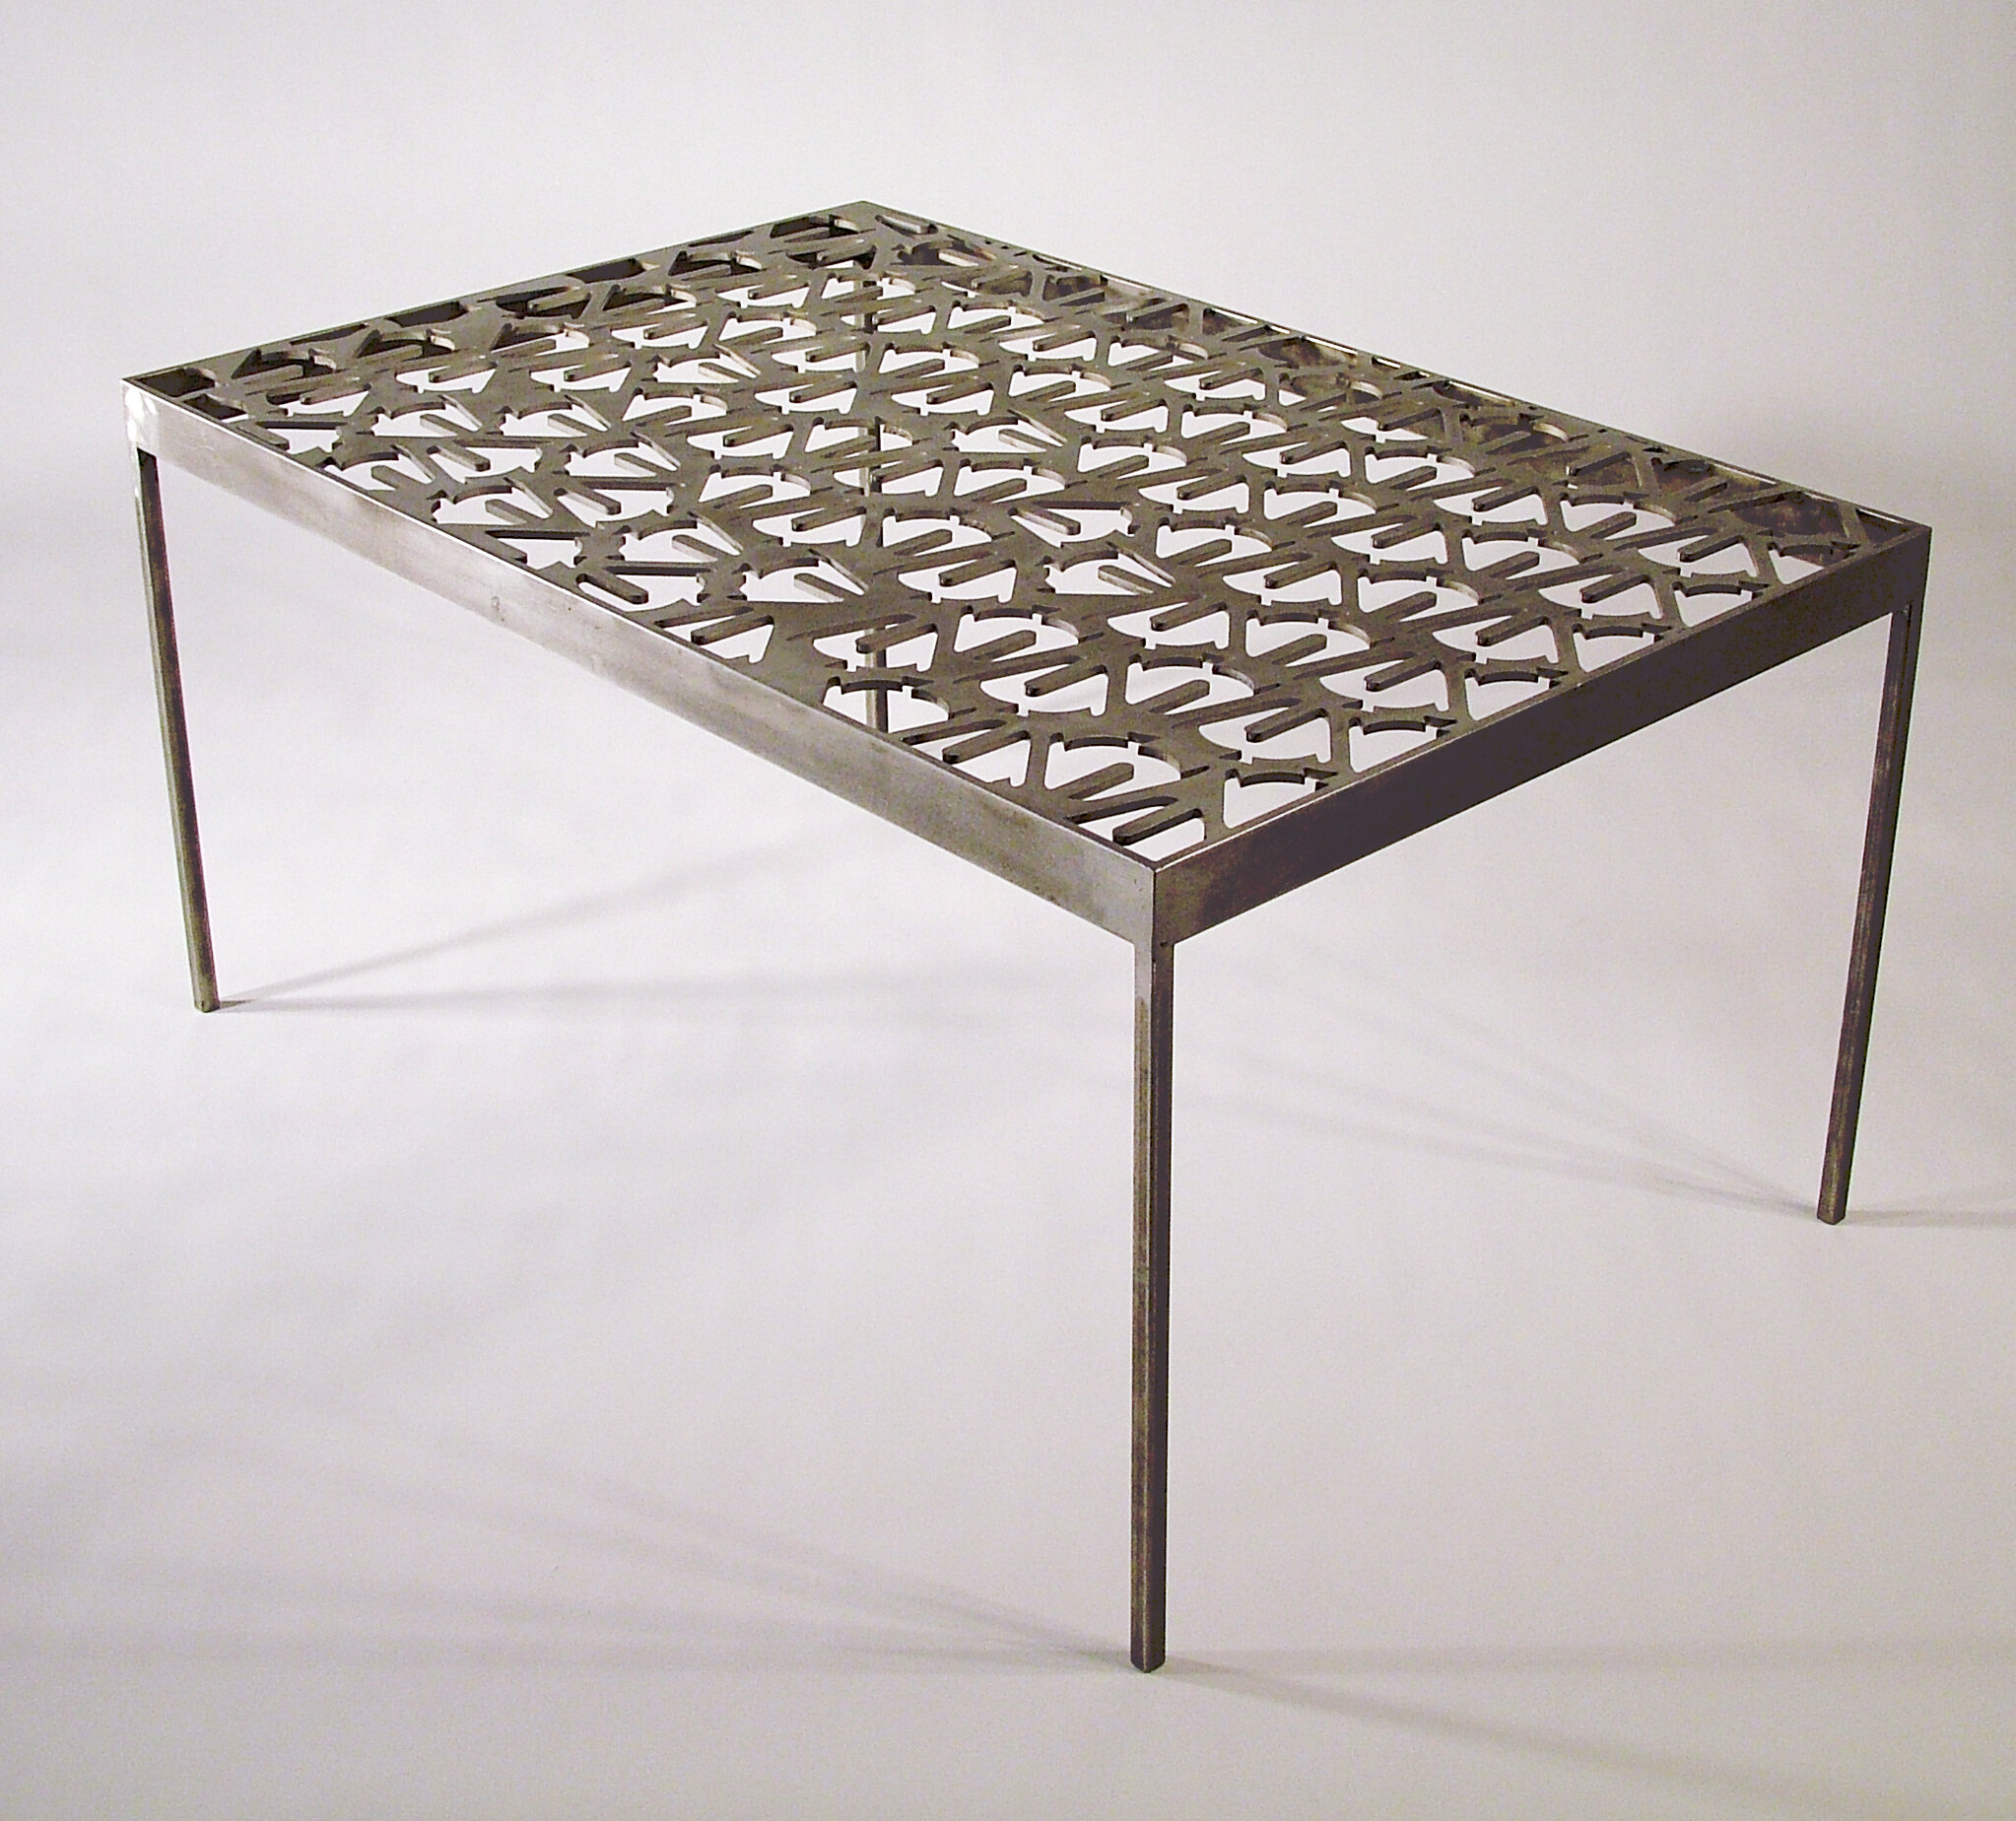 Stainless Steel Swarf Table